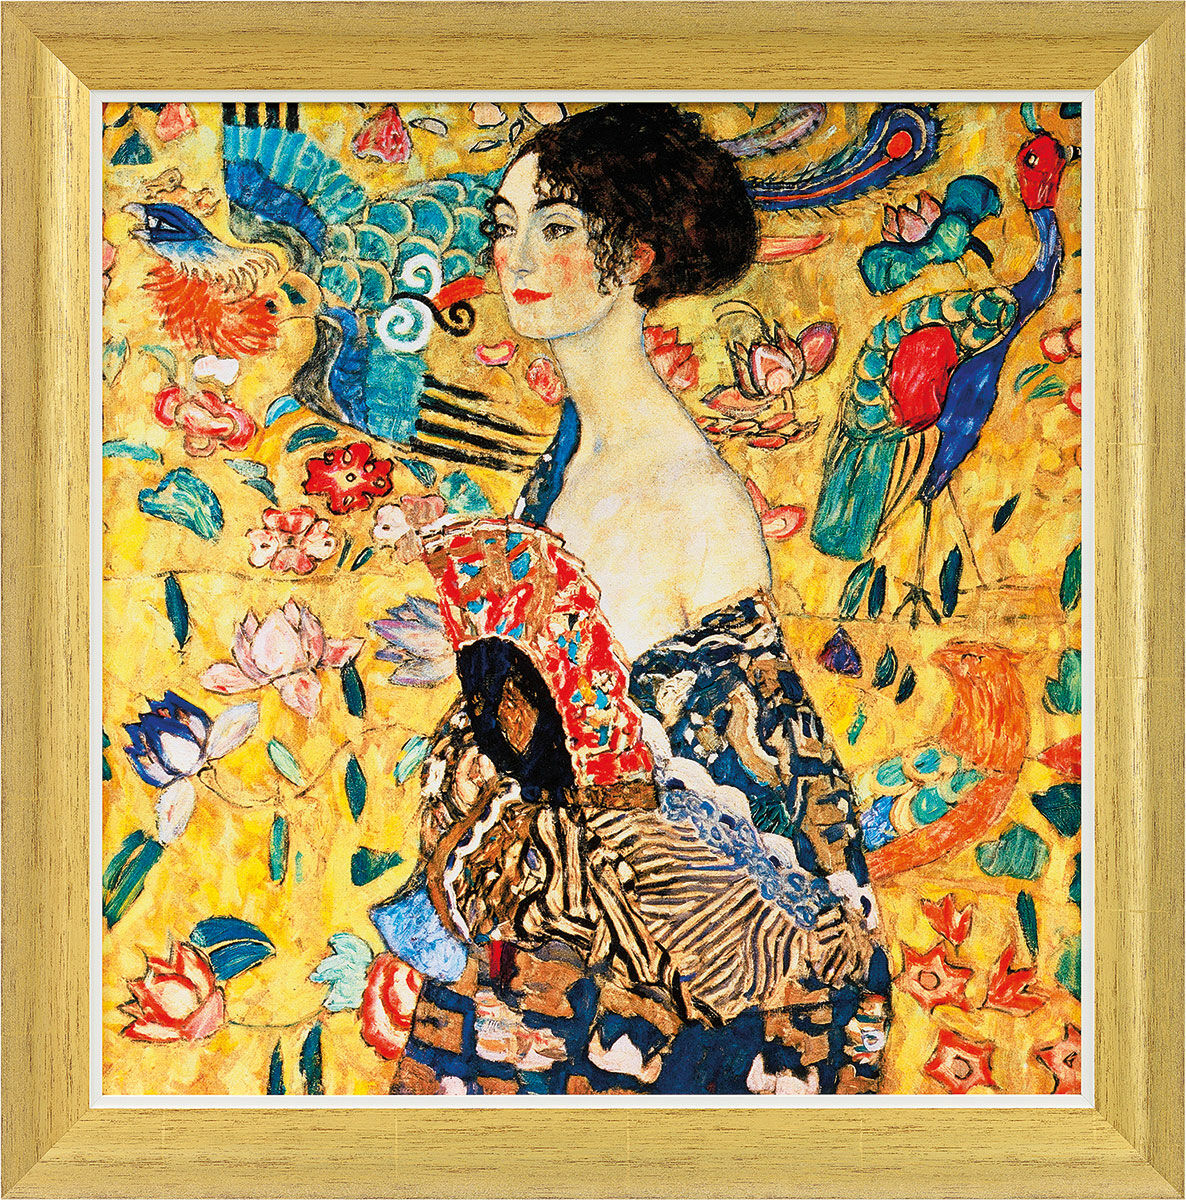 Picture "Lady with Fan" (1917/18), golden framed version by Gustav Klimt